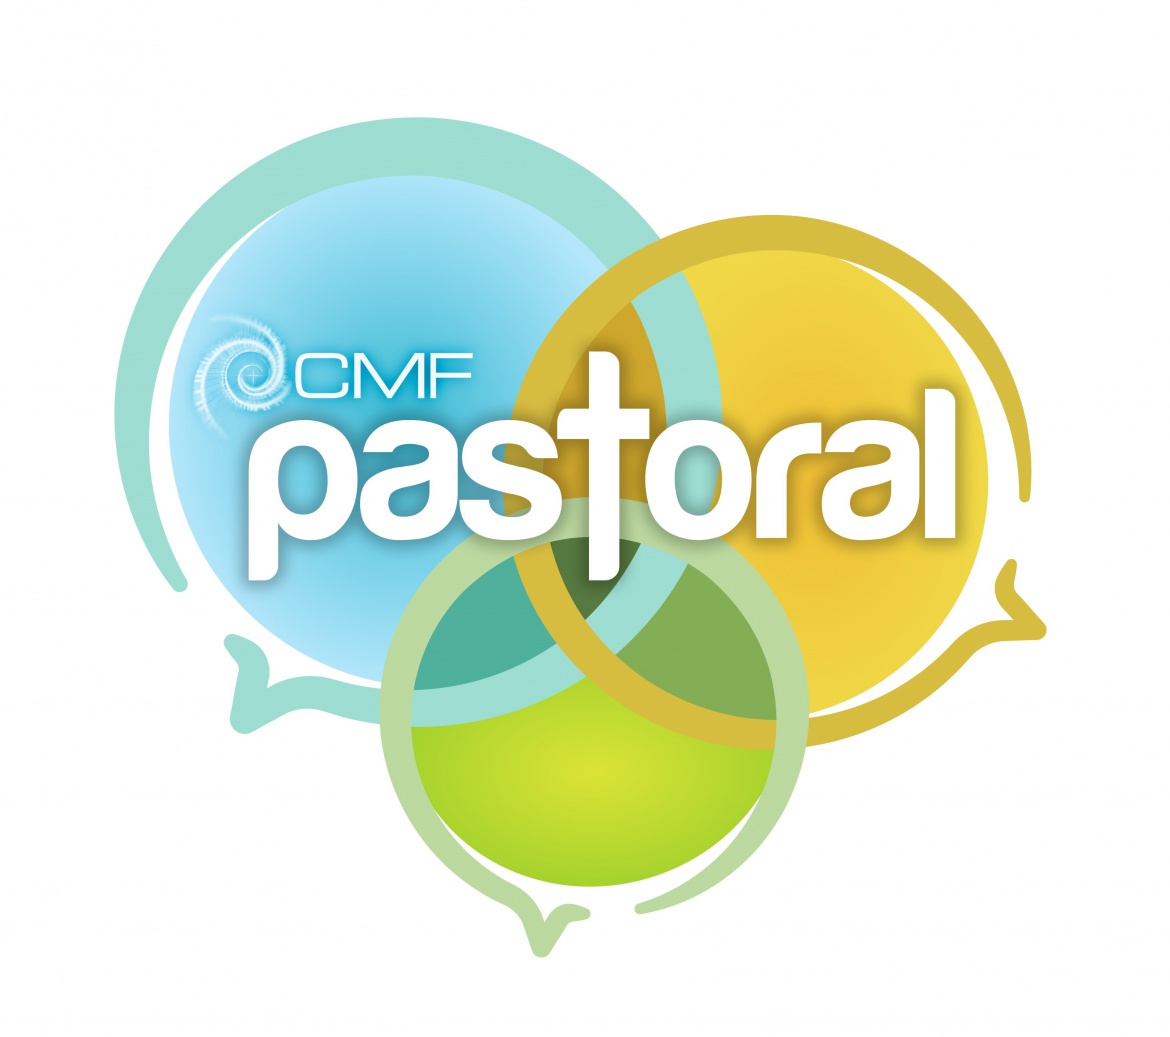 CMF Pastoral